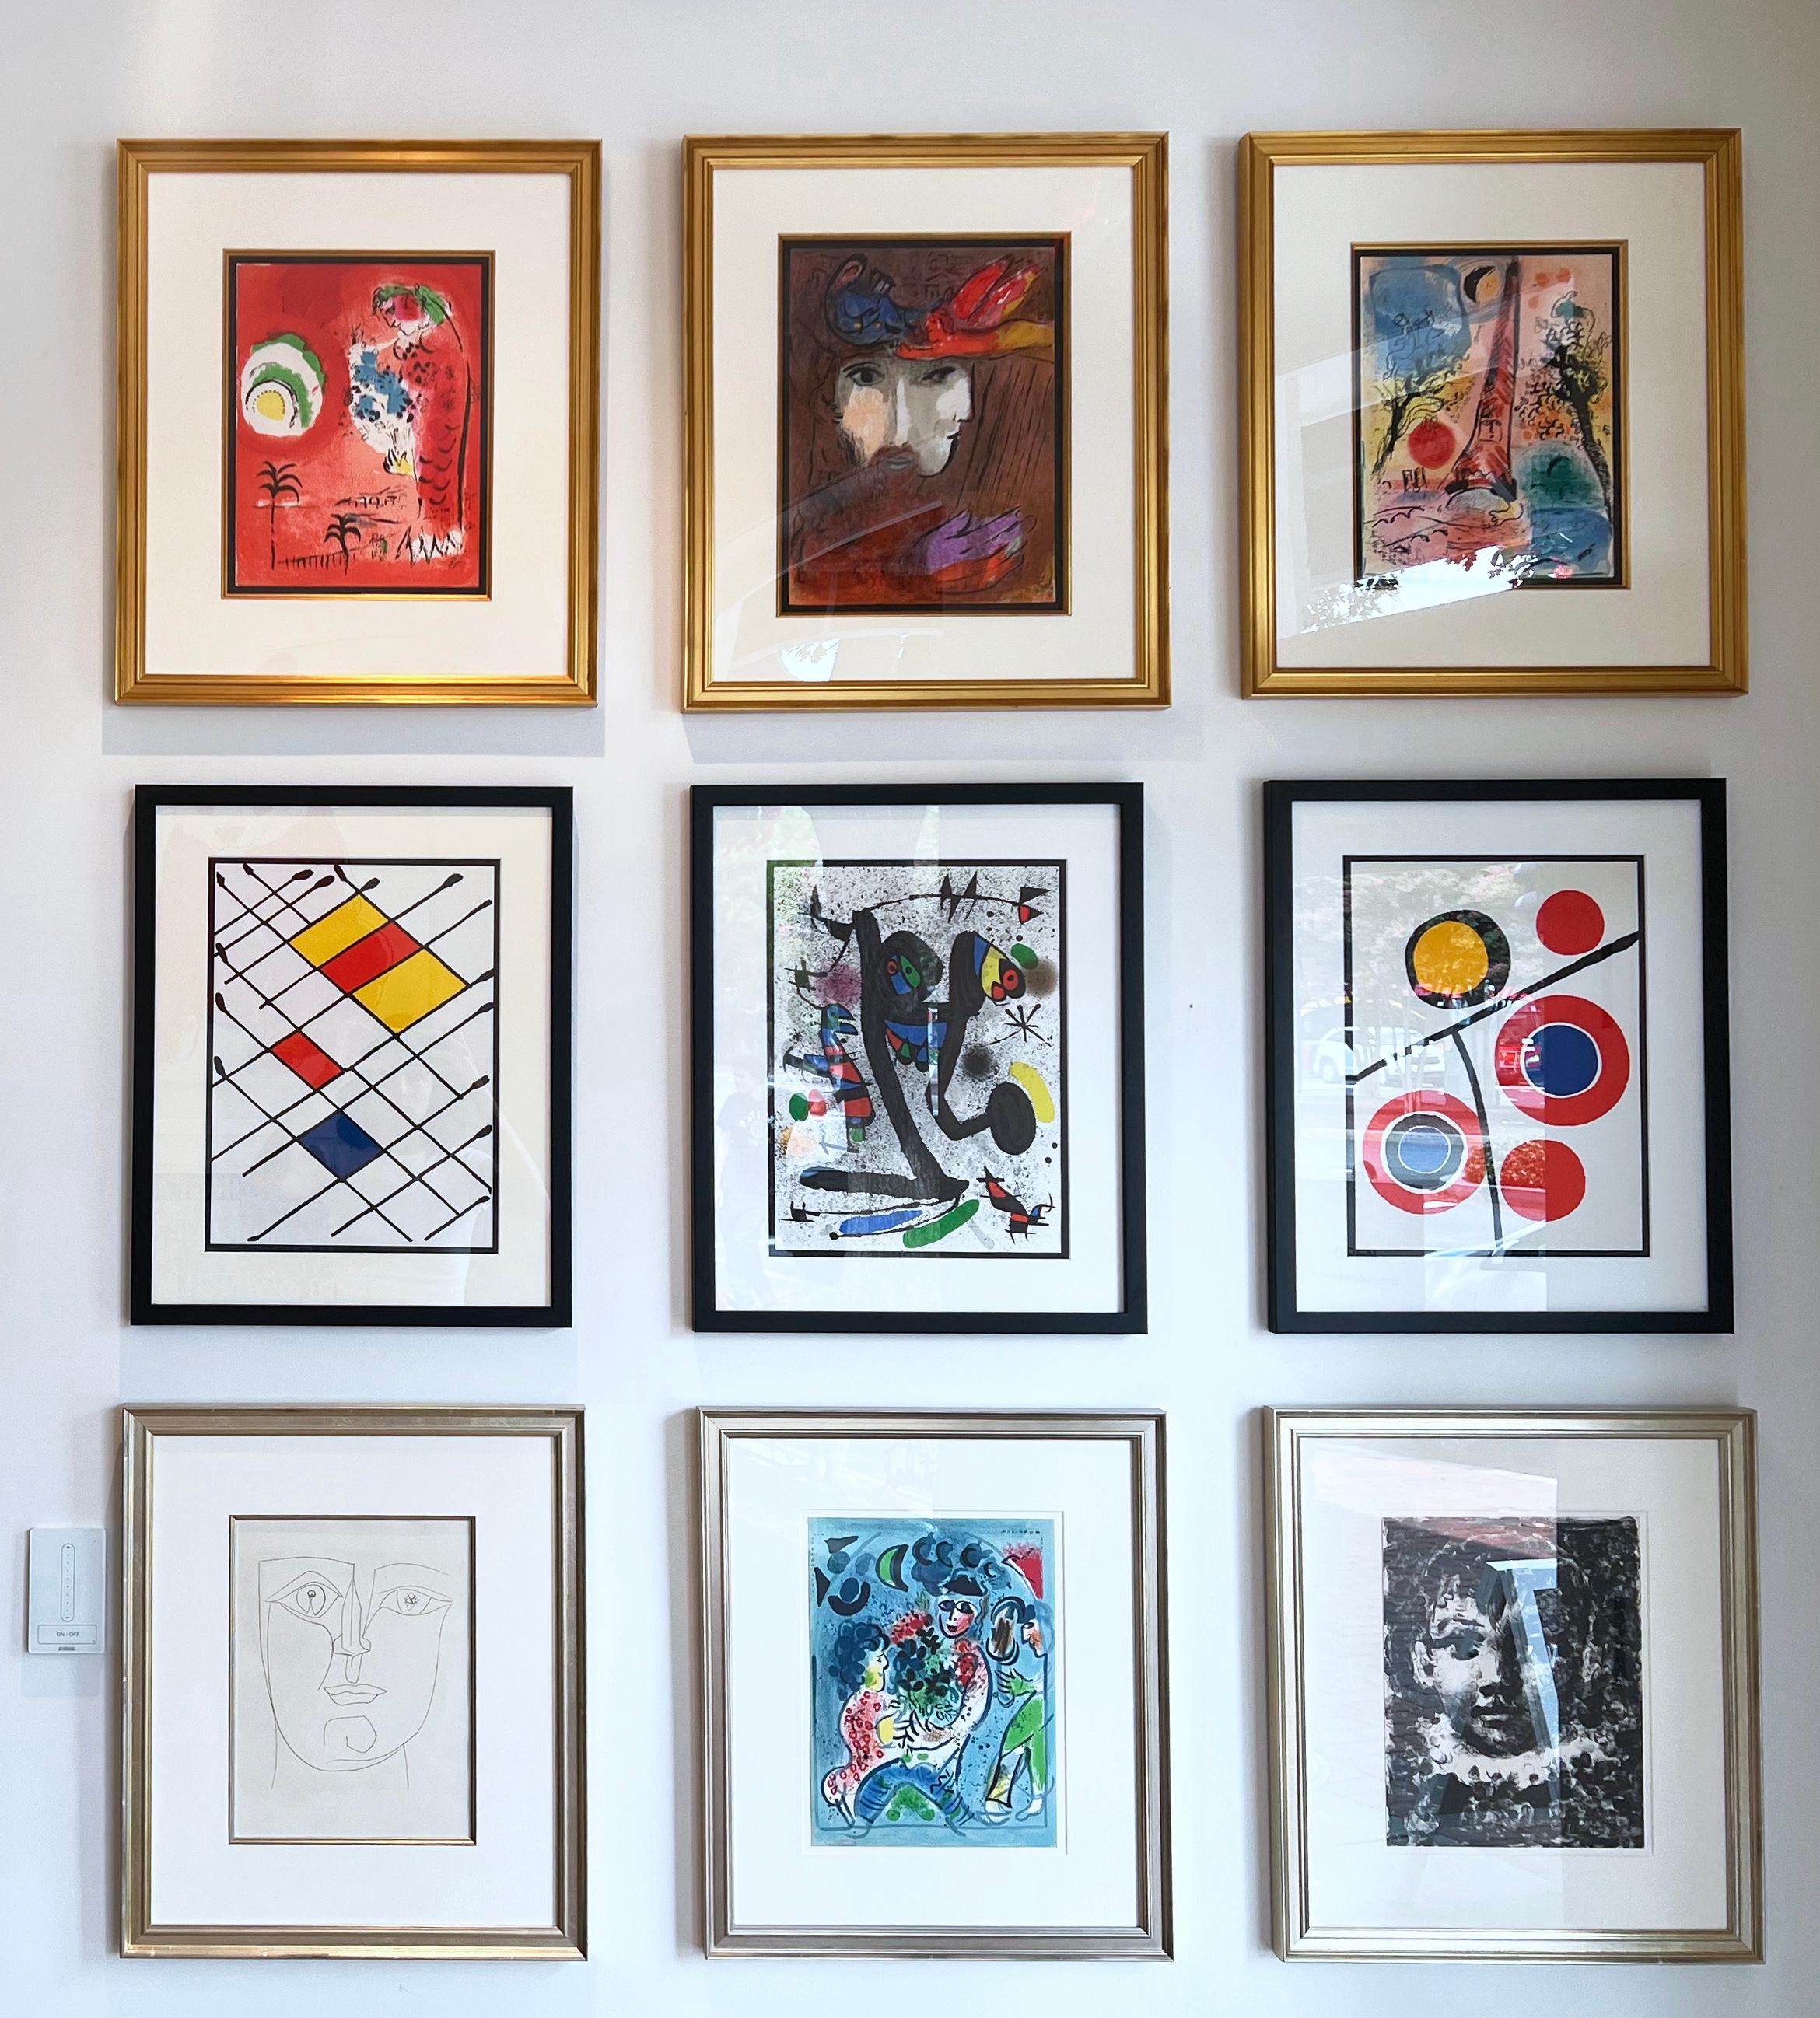 Artist: Alexander Calder
Medium: Lithograph
Title: Derriere le Miroir #201
Portfolio: Derriere le Miroir #201
Year: 1973
Edition: Unnumbered
Framed Size: 21 1/4